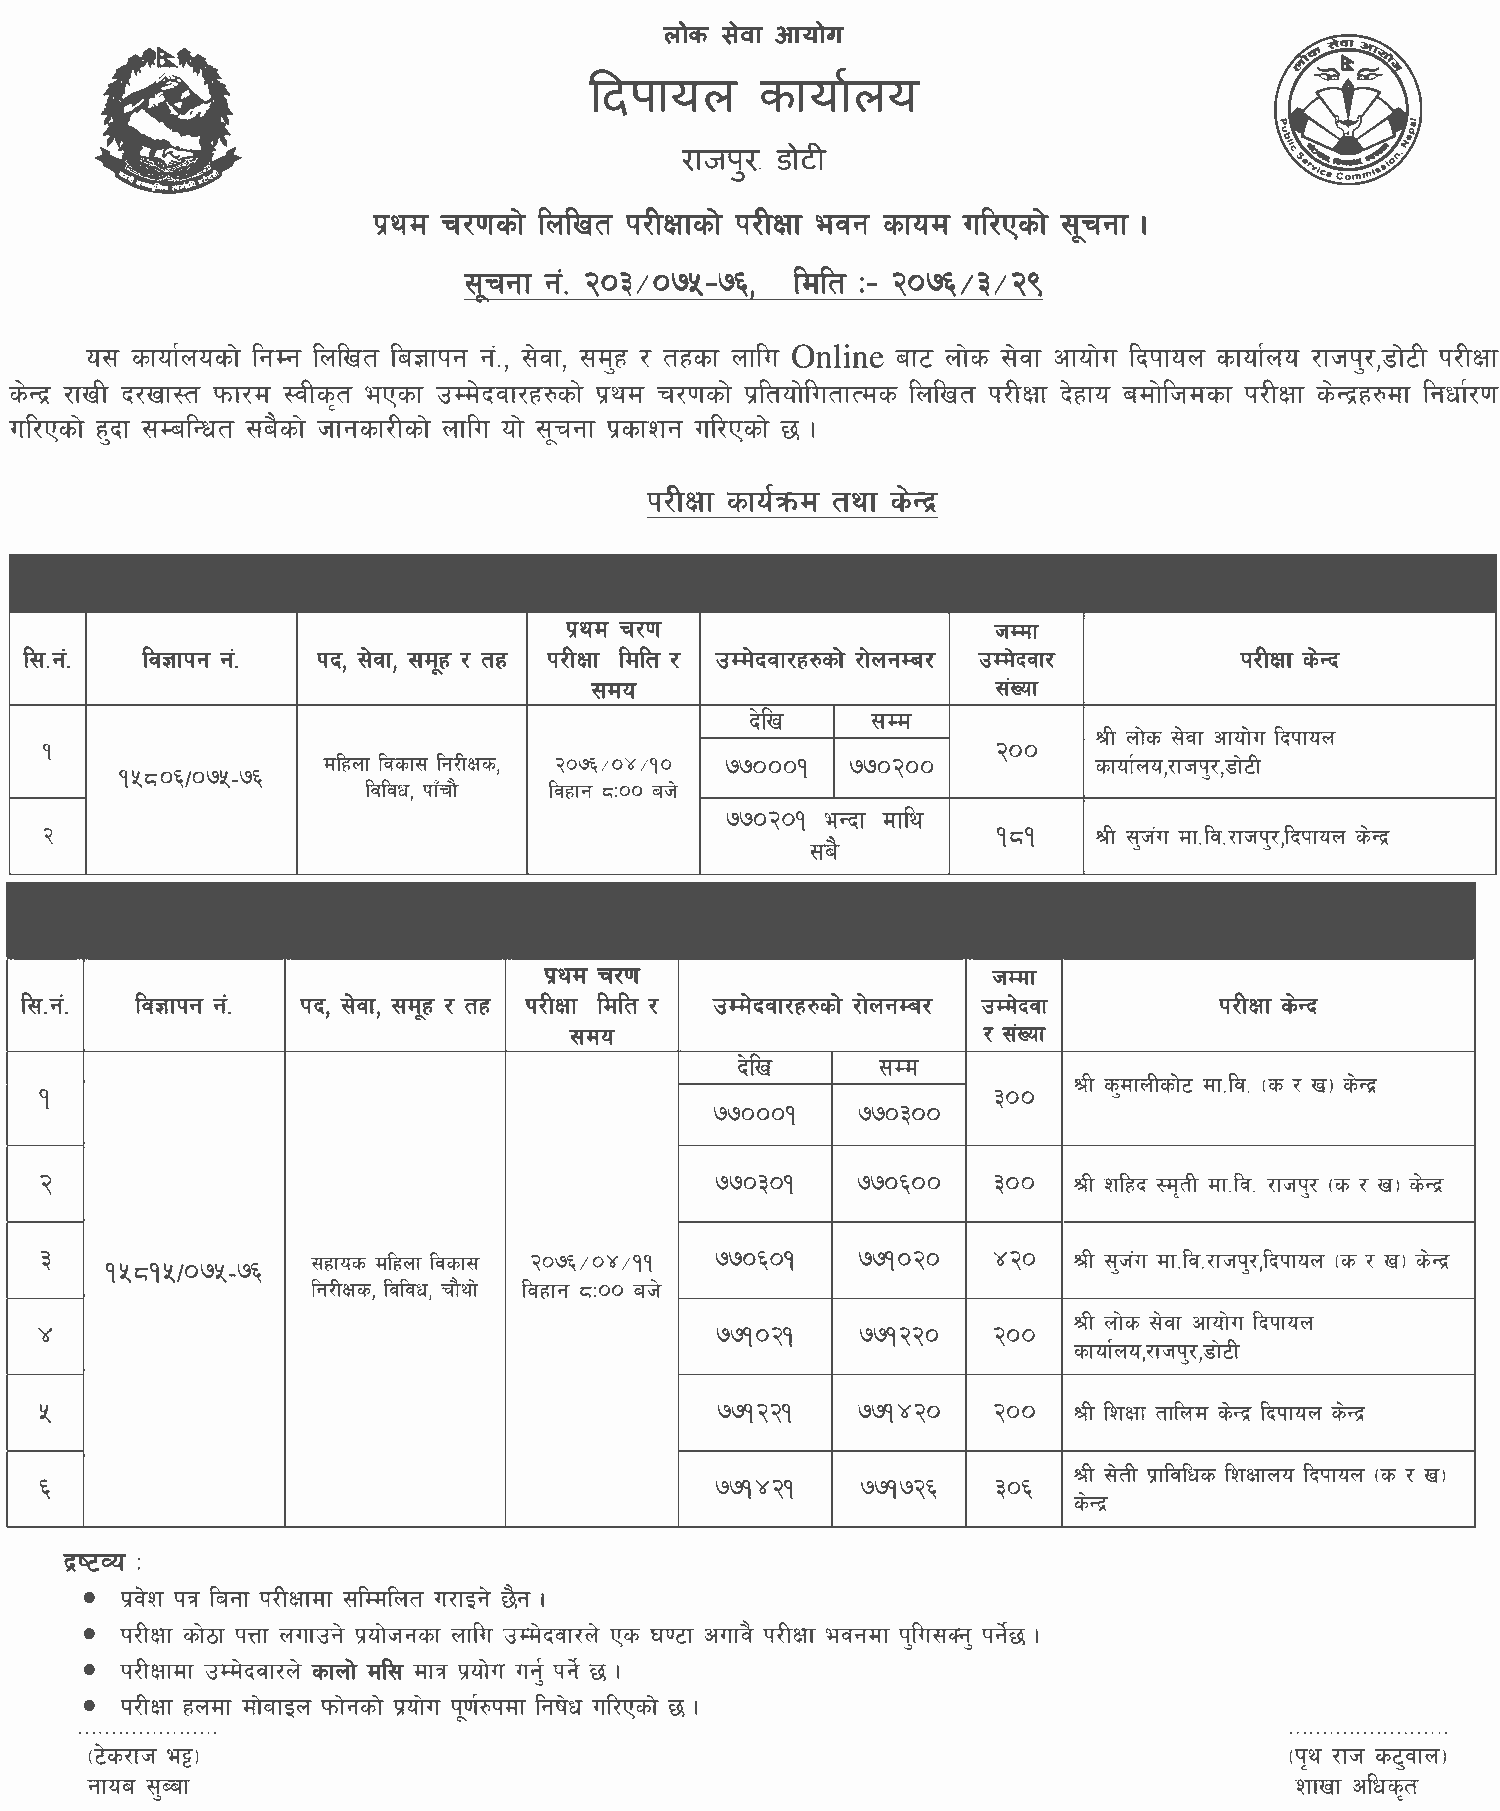 Local Level 4th and 5th Level Mahila Bikas Written Exam Center - Dipayal